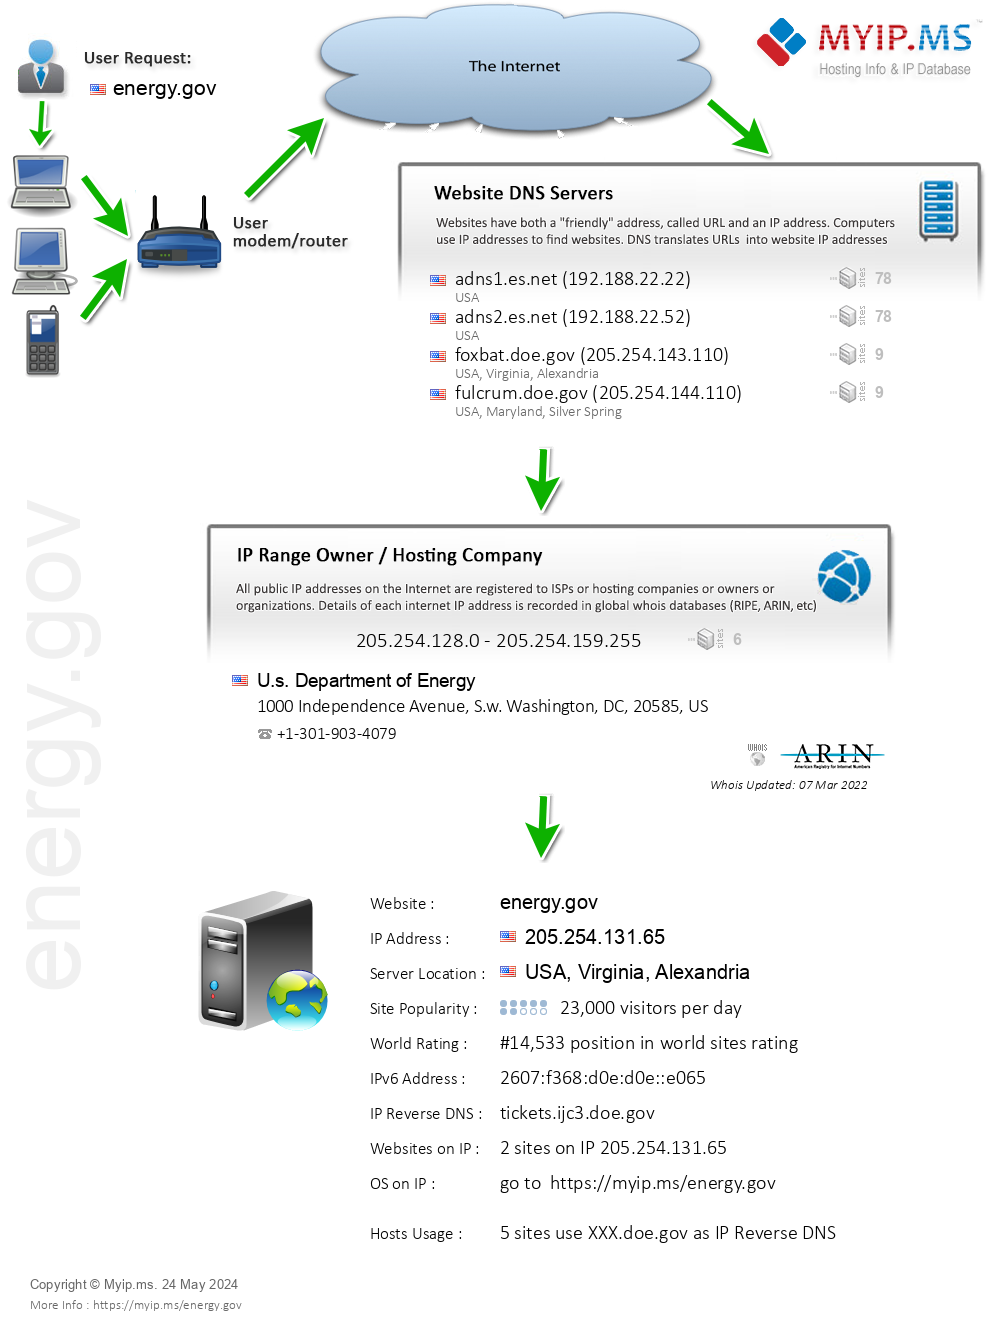 Energy.gov - Website Hosting Visual IP Diagram